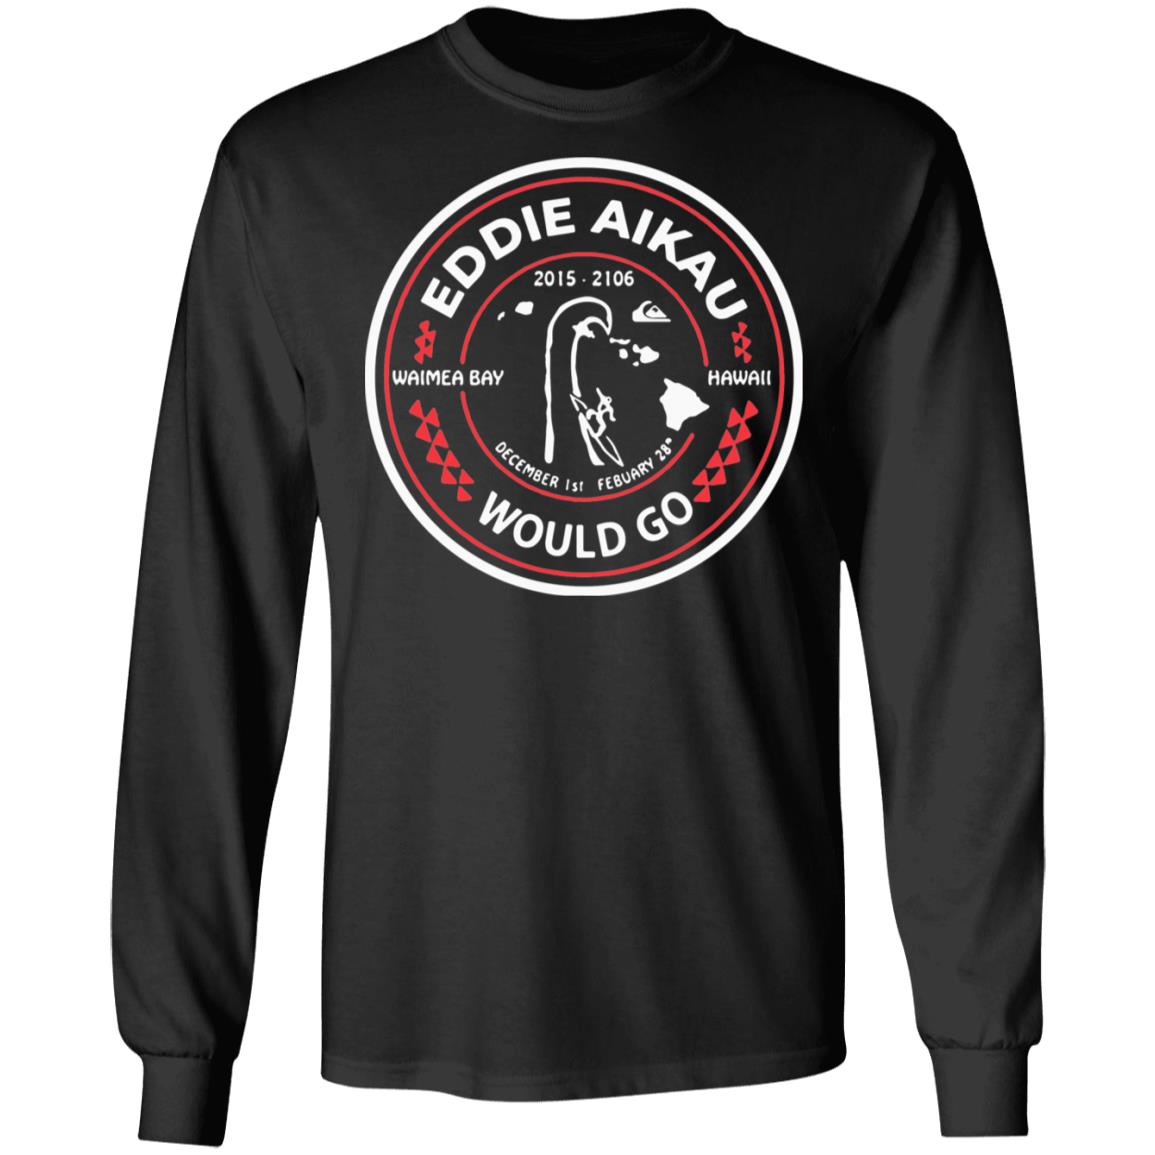 Eddie Aikau Would Go Shirt, T-Shirt, Hoodie, Tank Top, Sweatshirt